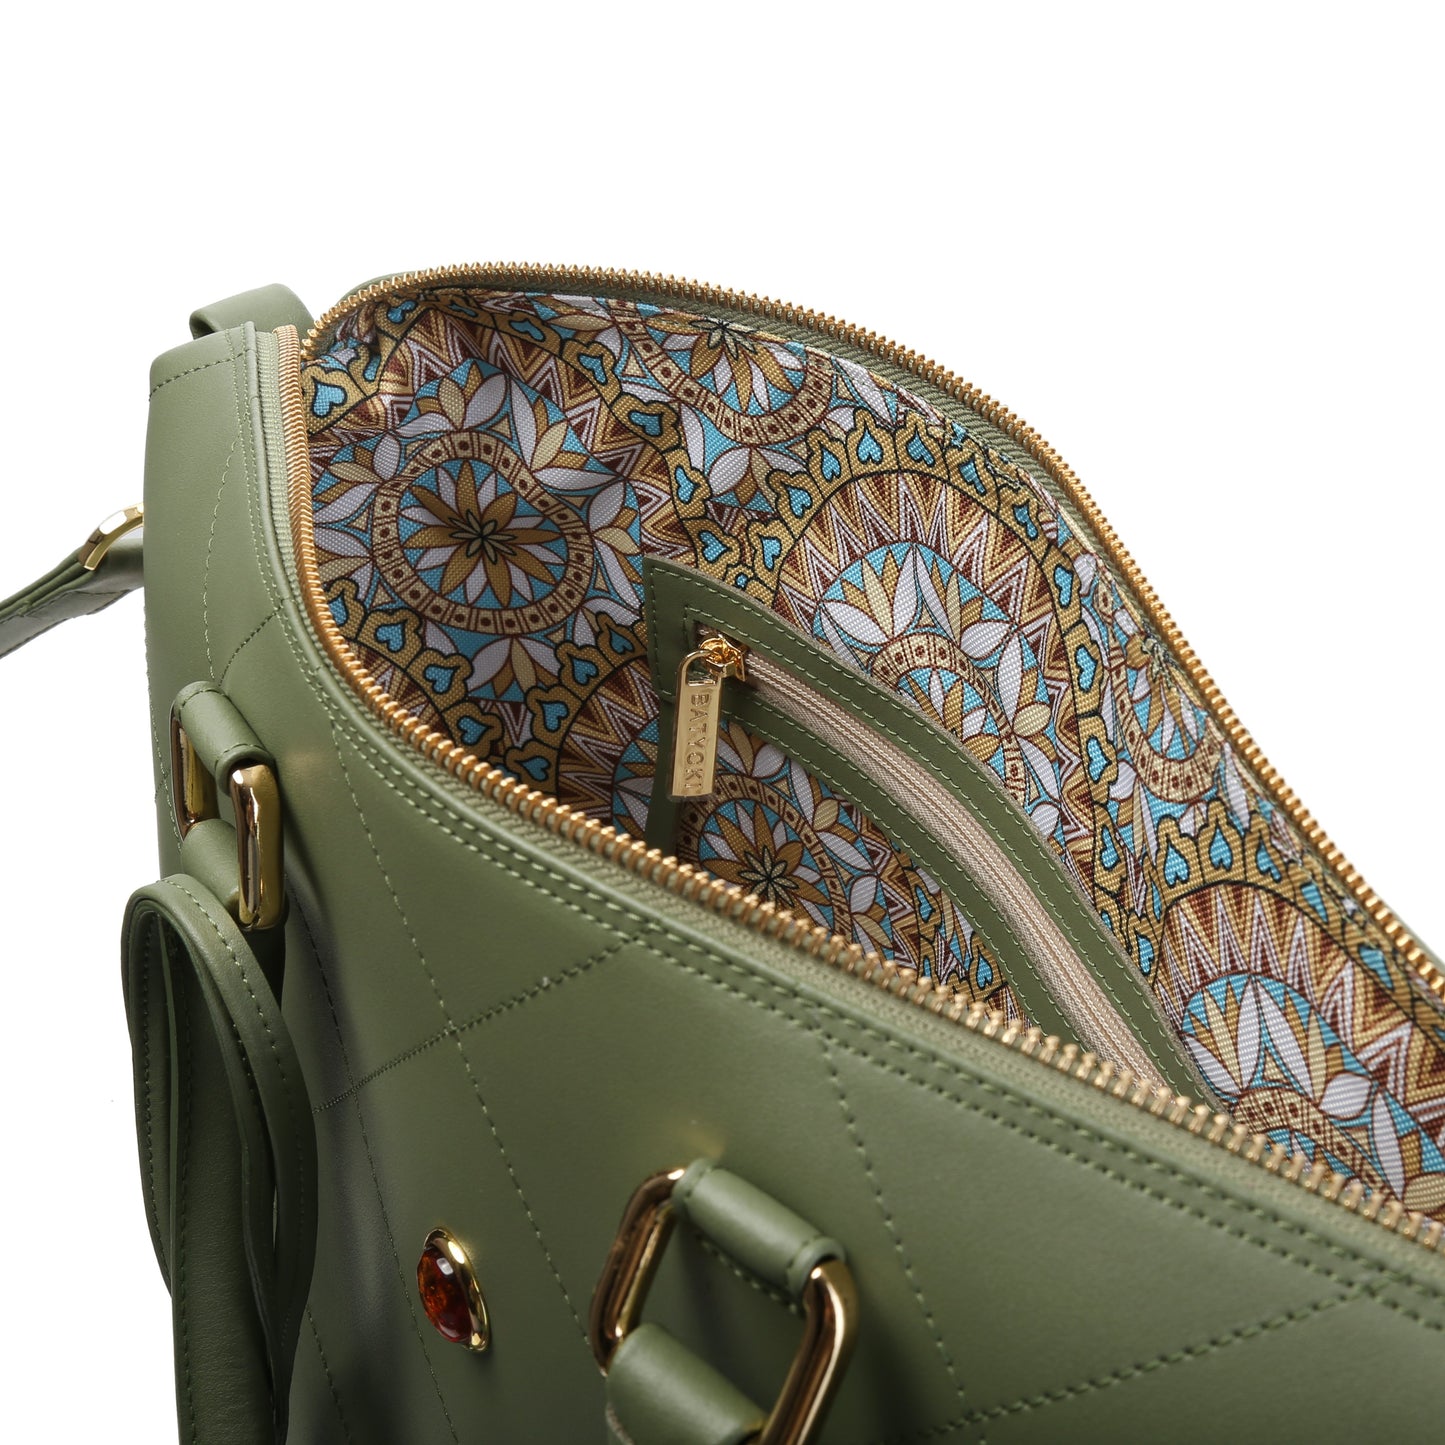 HERRA NAPA OLIVE women's leather handbag